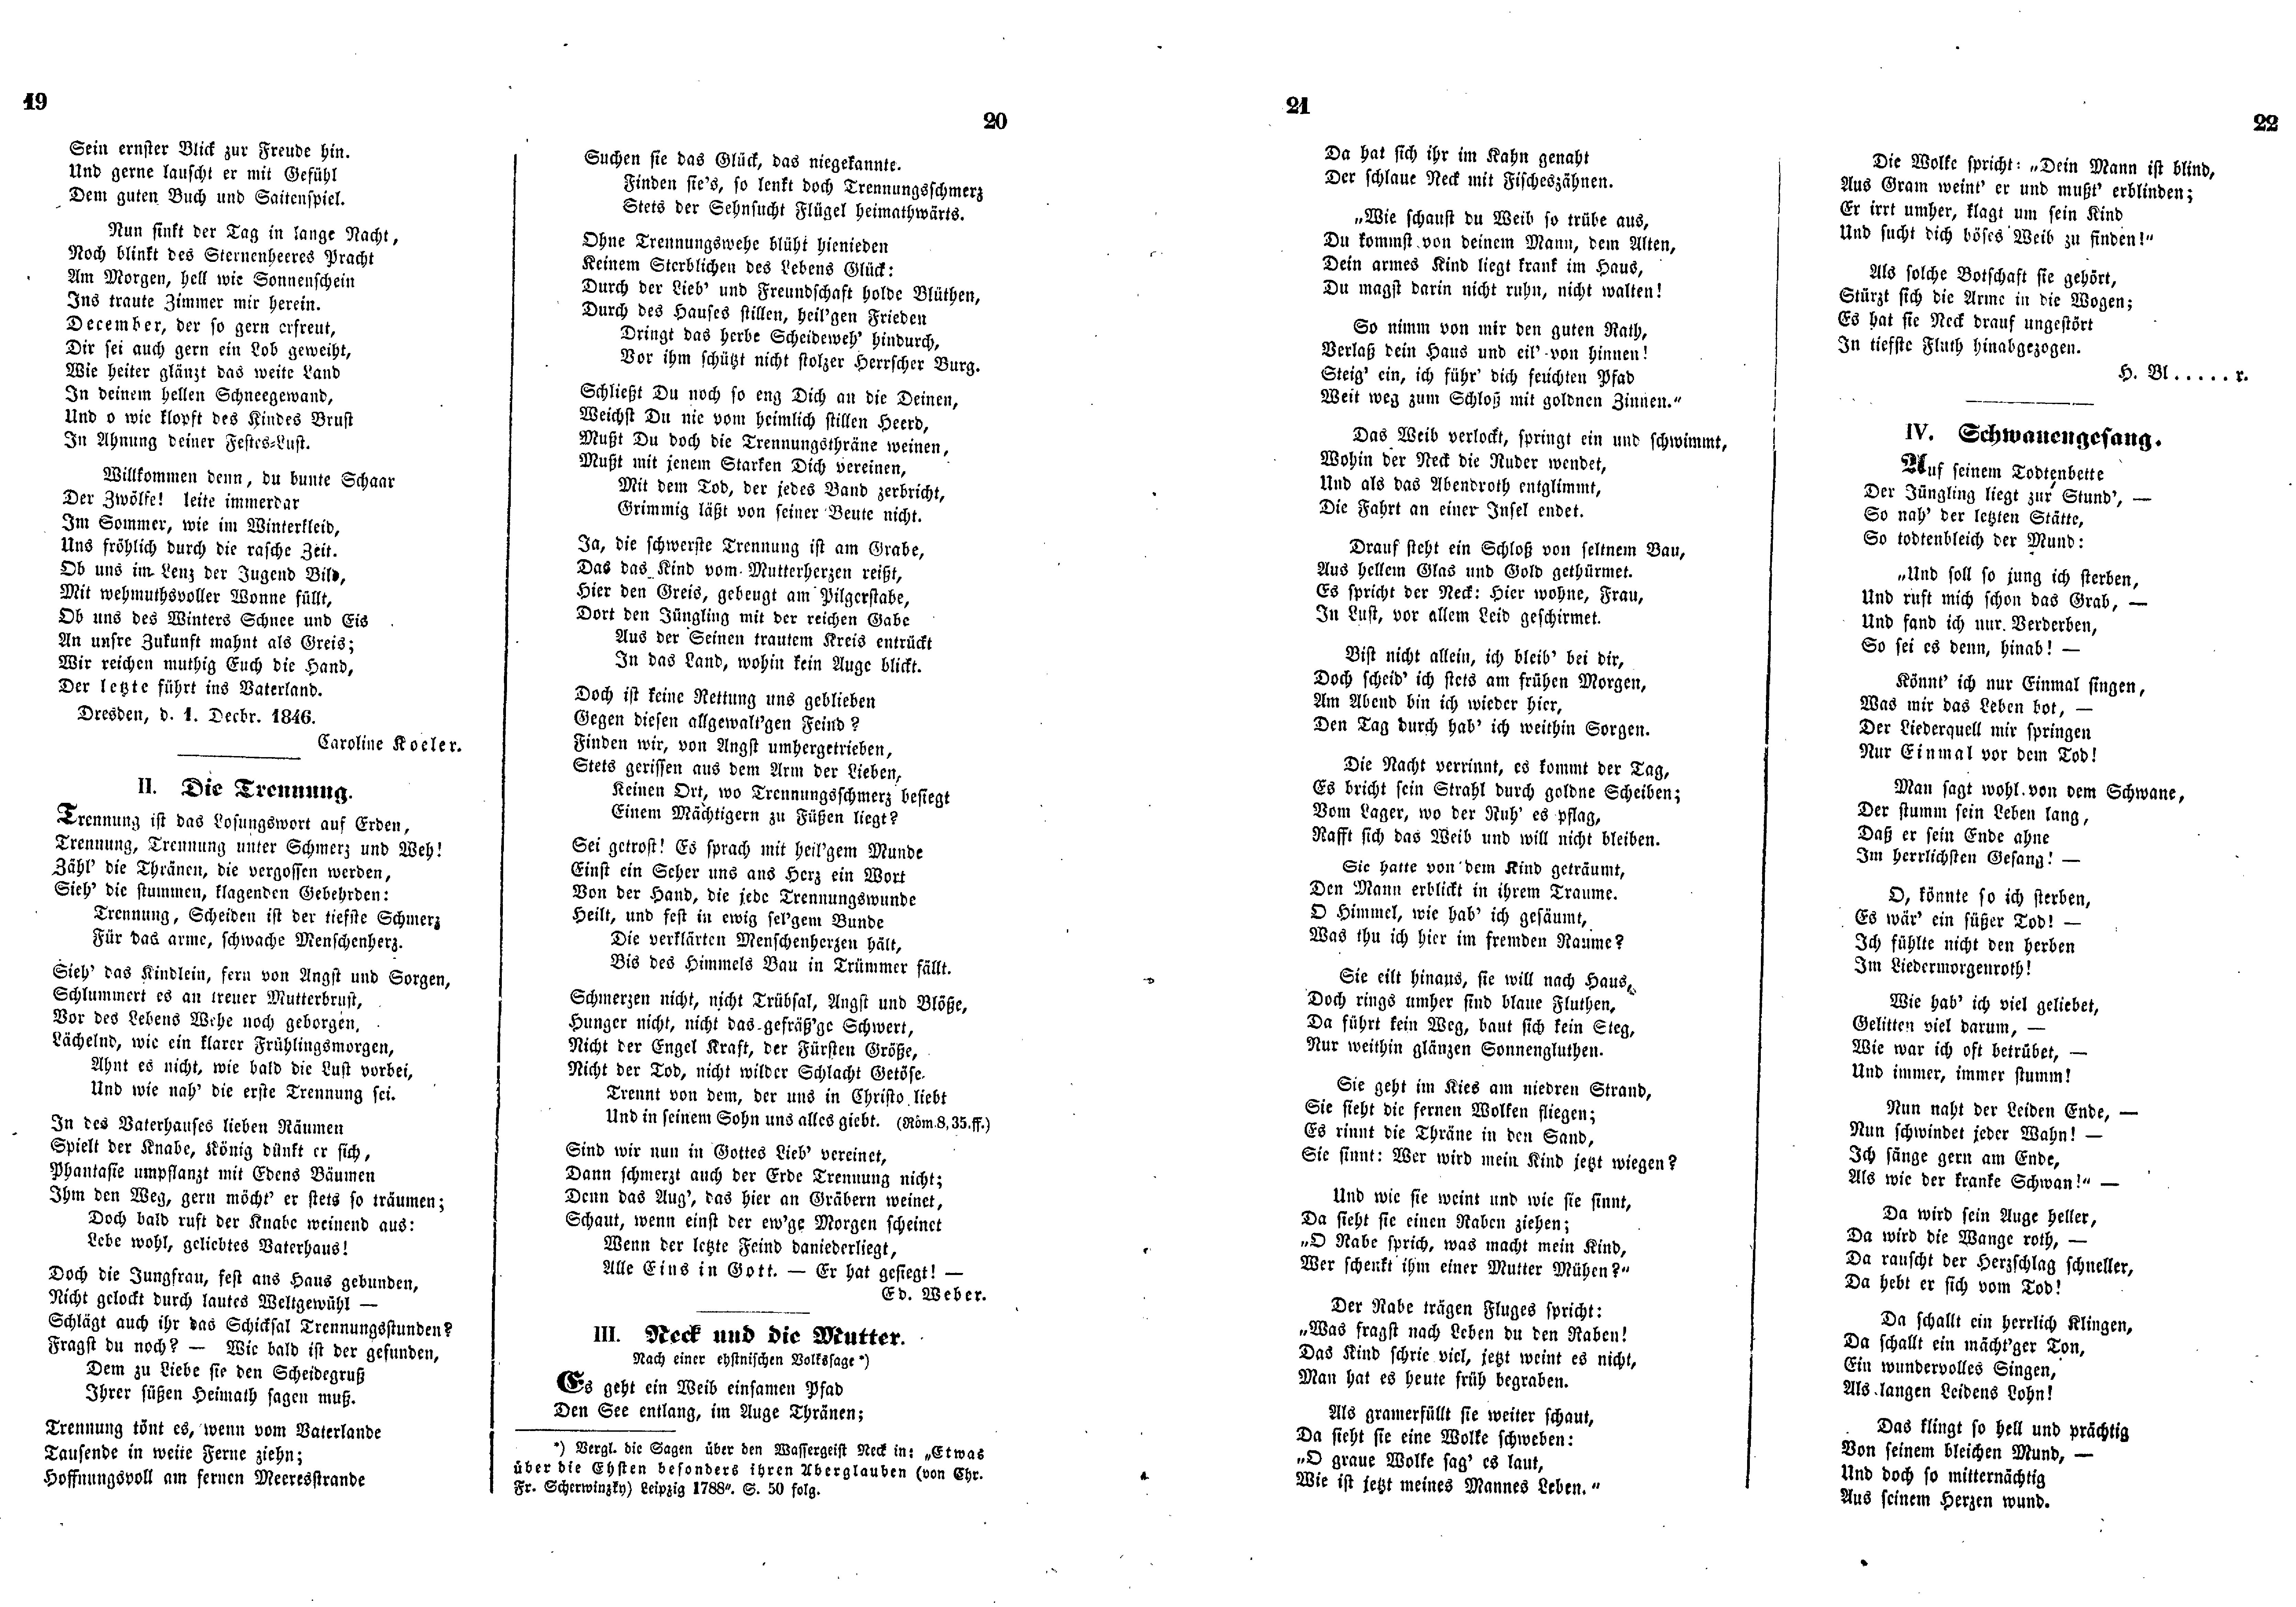 Das Inland [12] (1847) | 10. (19-22) Main body of text